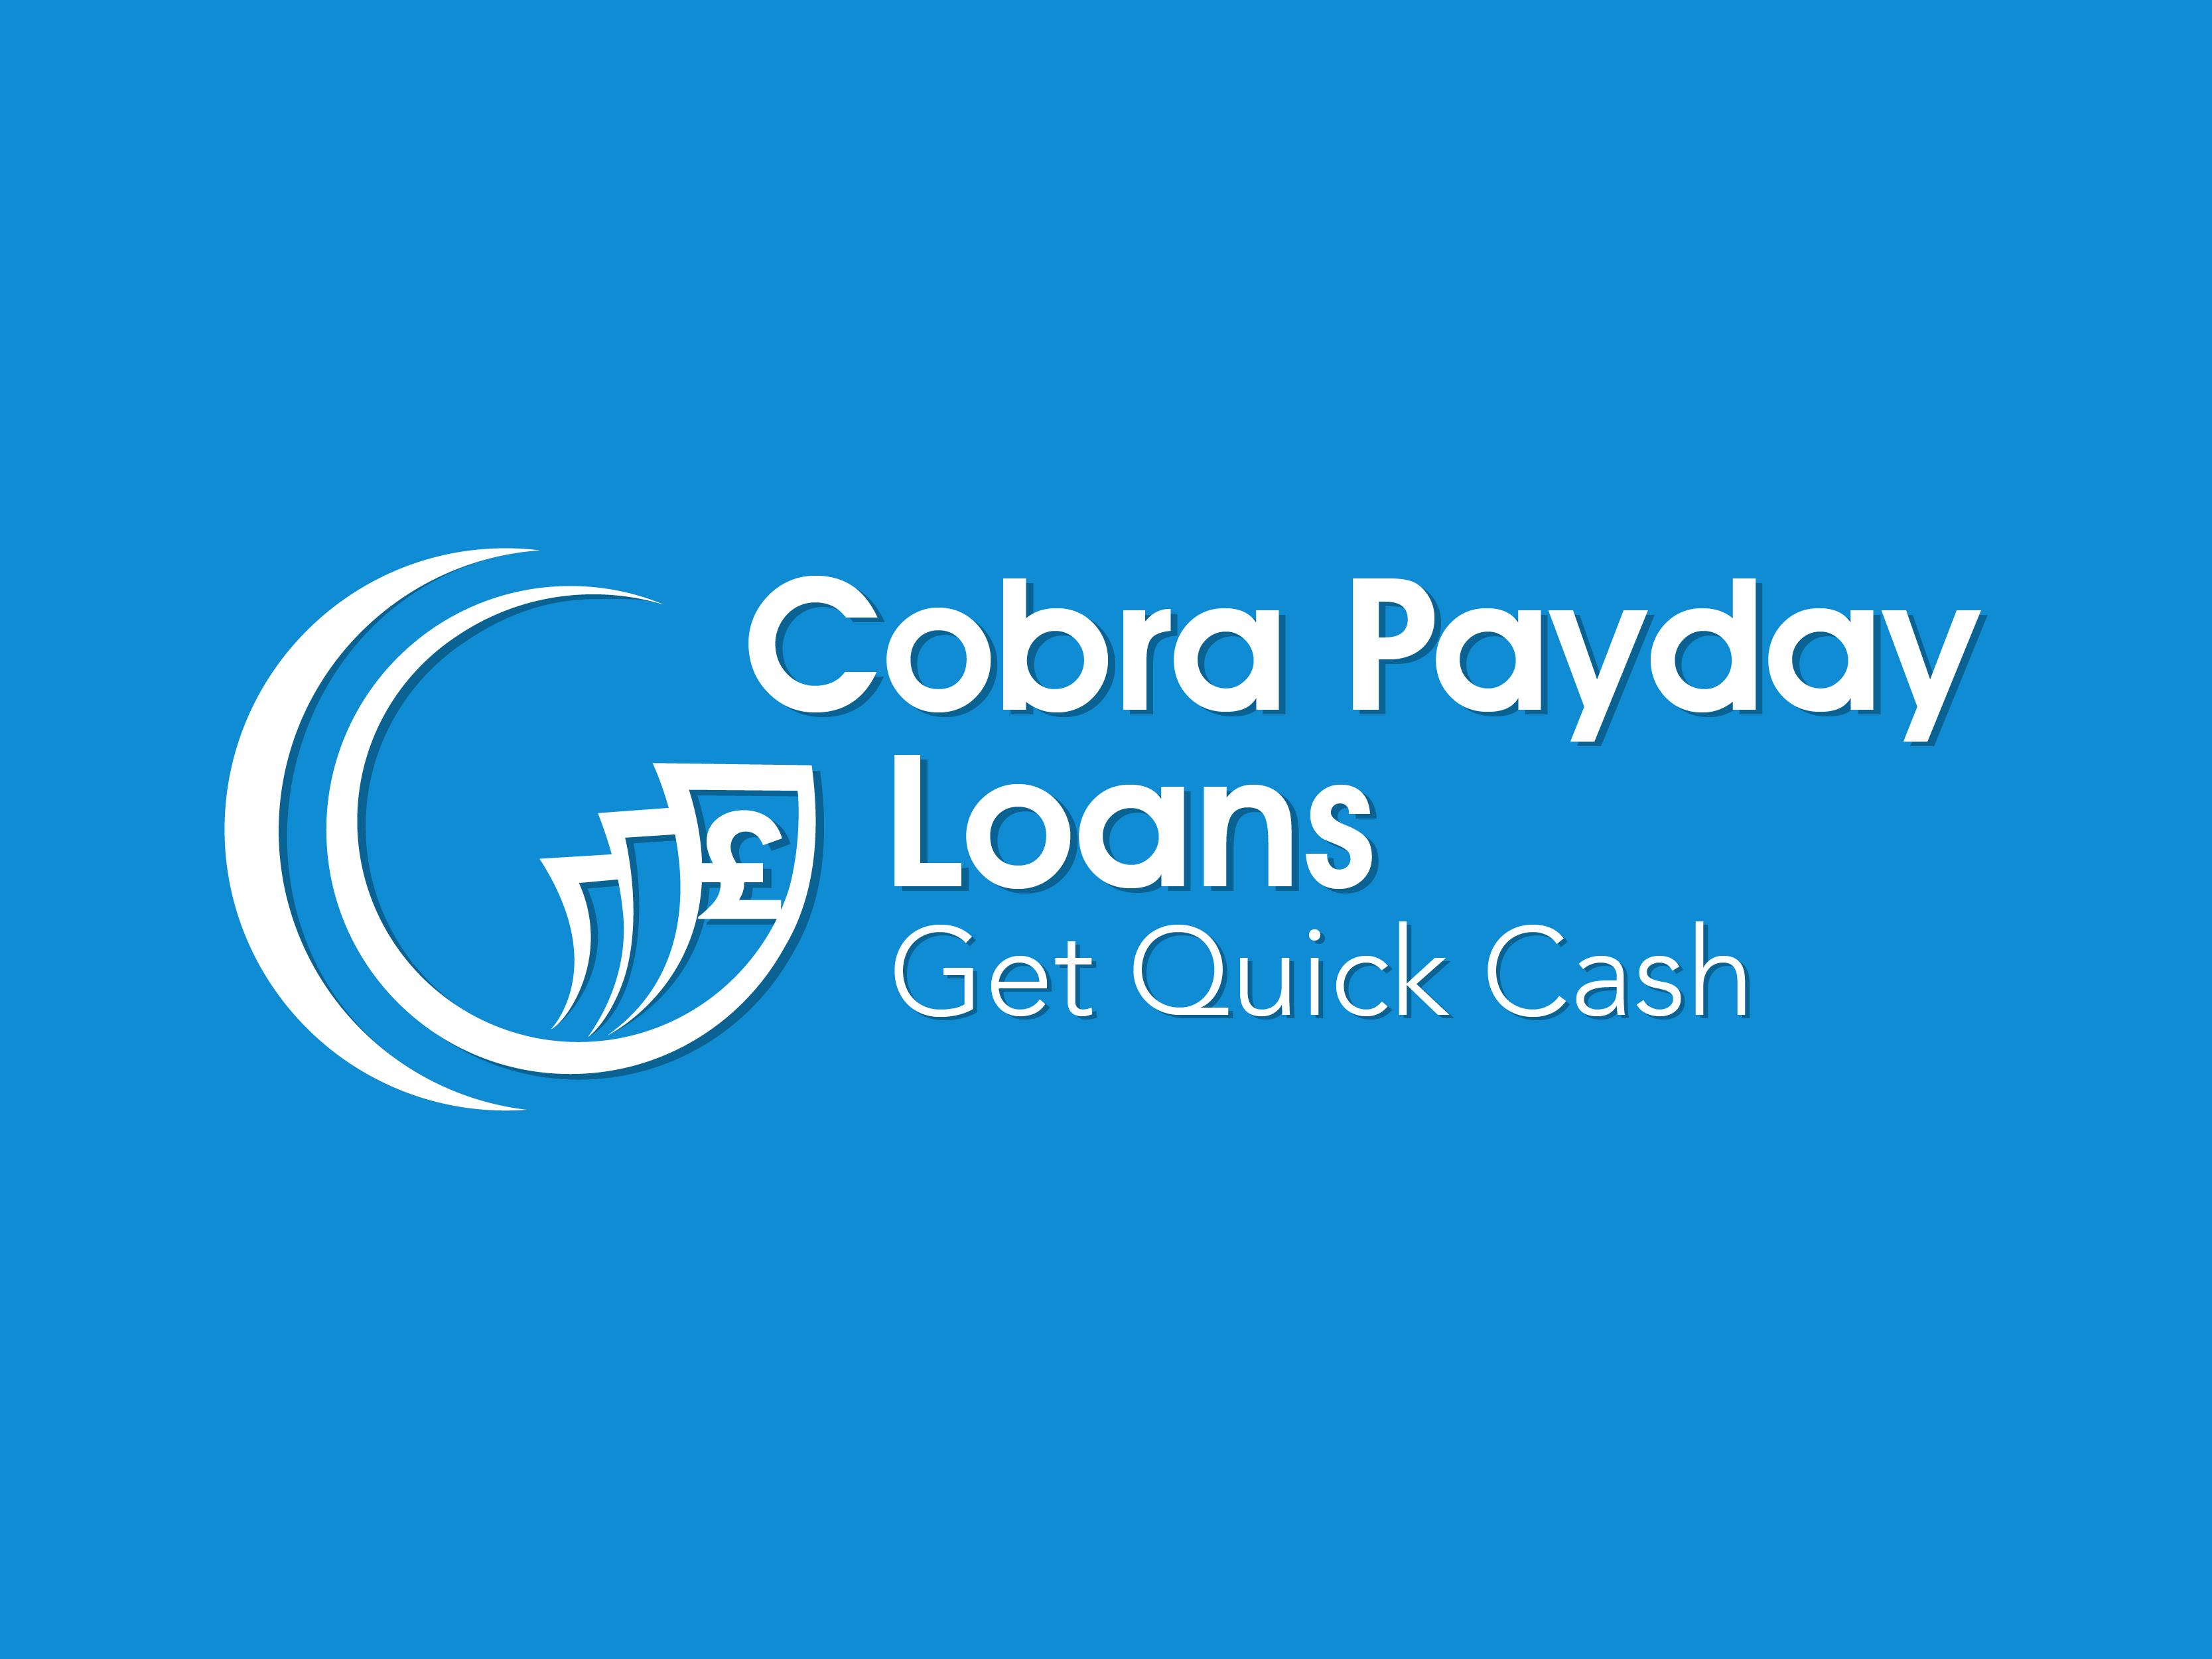 Cobra Payday Loans